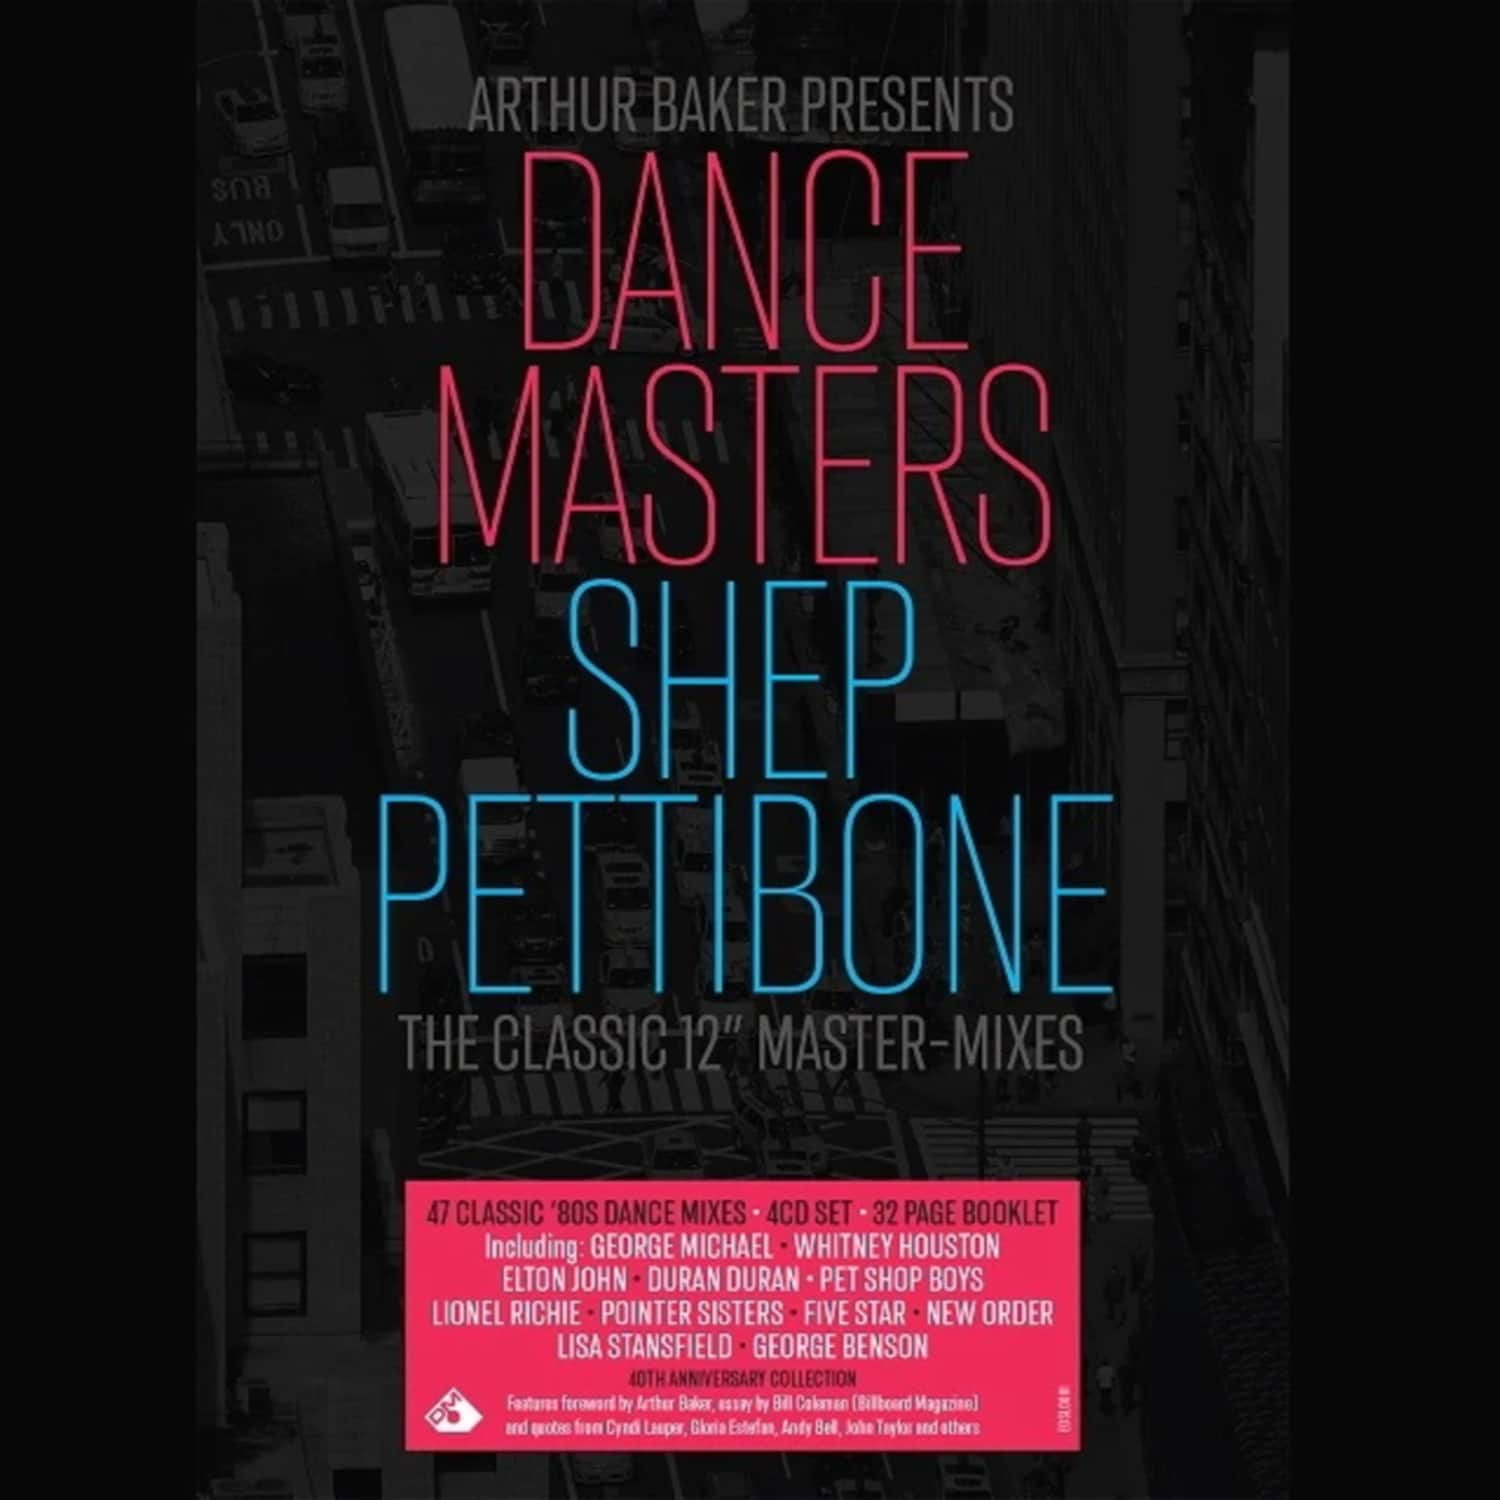 Arthur Baker Pres. Dance Masters - THE SHEP PETTIBONE MASTER - MIXES 